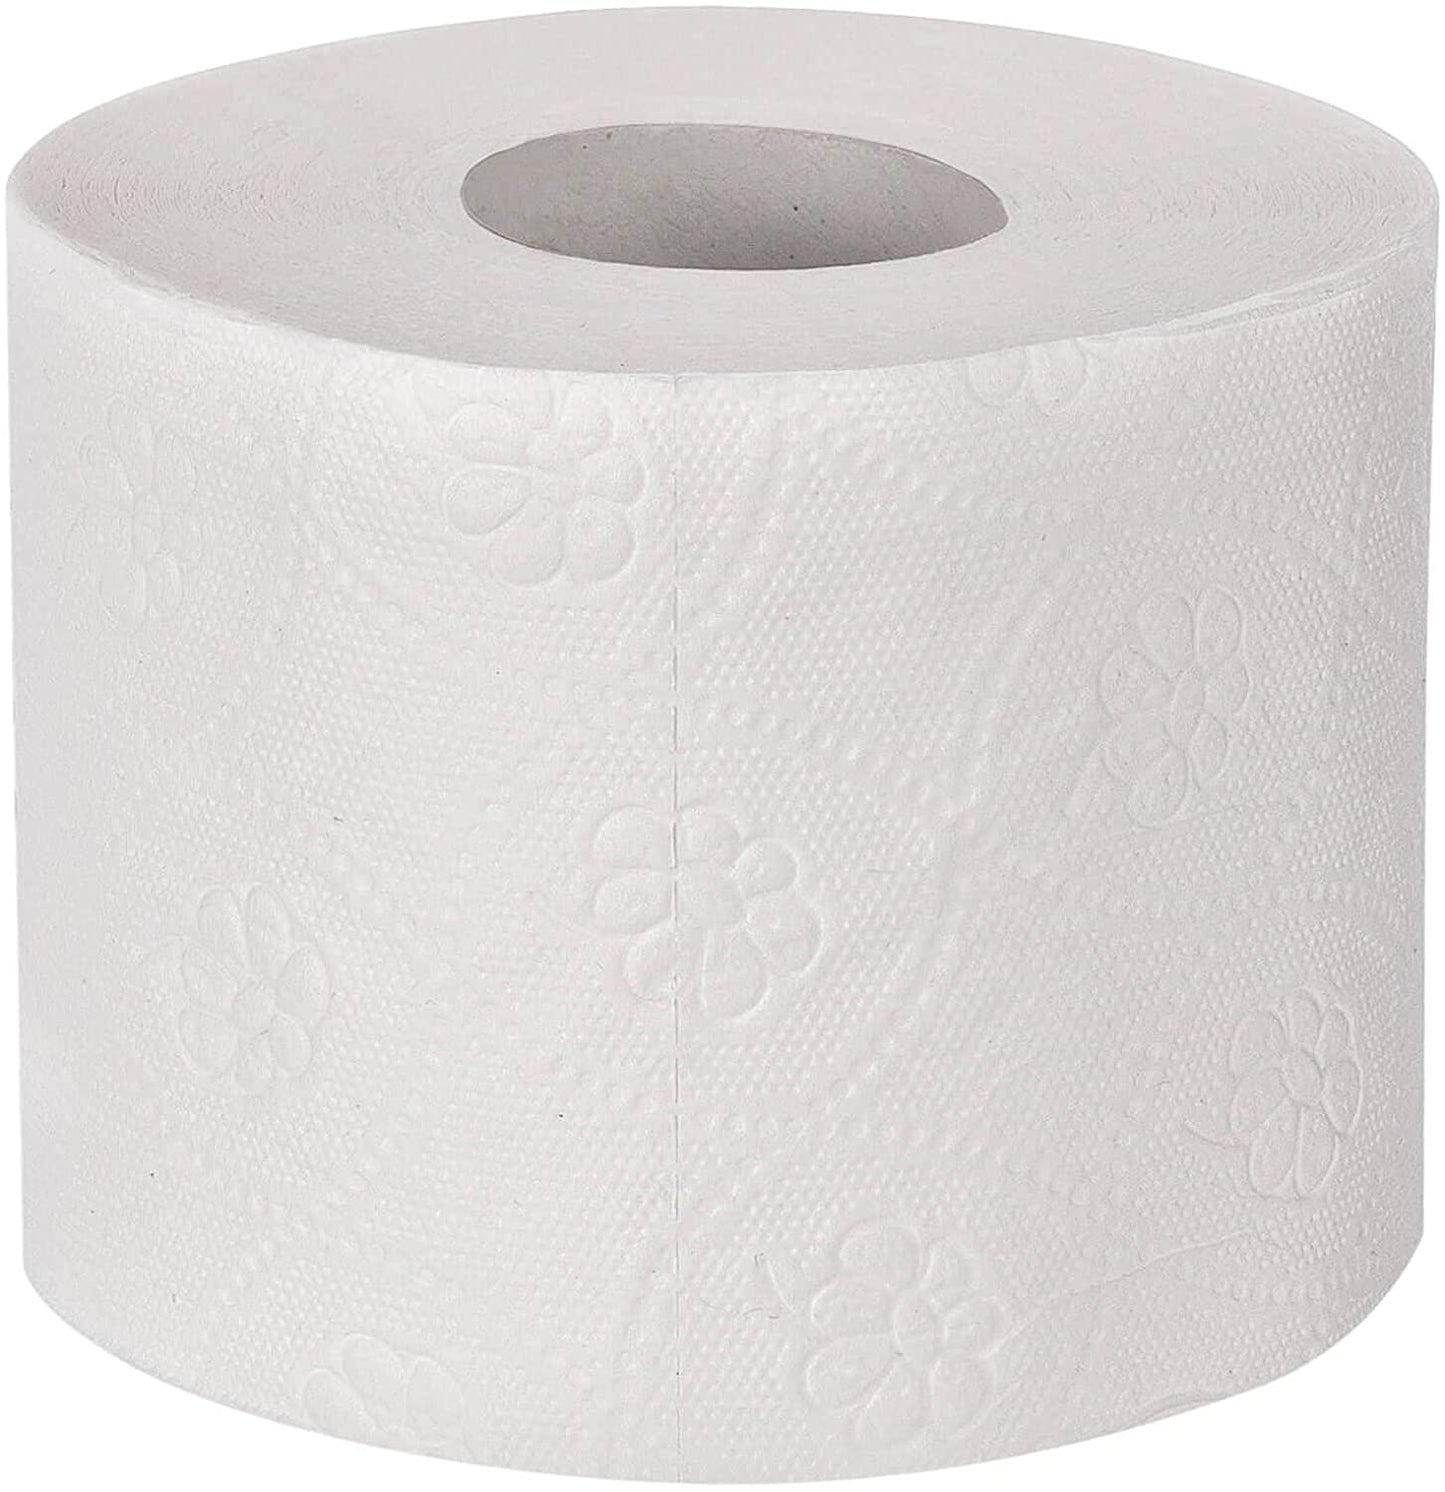 Hygiene Kit - Toilettenpapier Handtuch Zahnbürste Zahnpasta Natürliche Seife